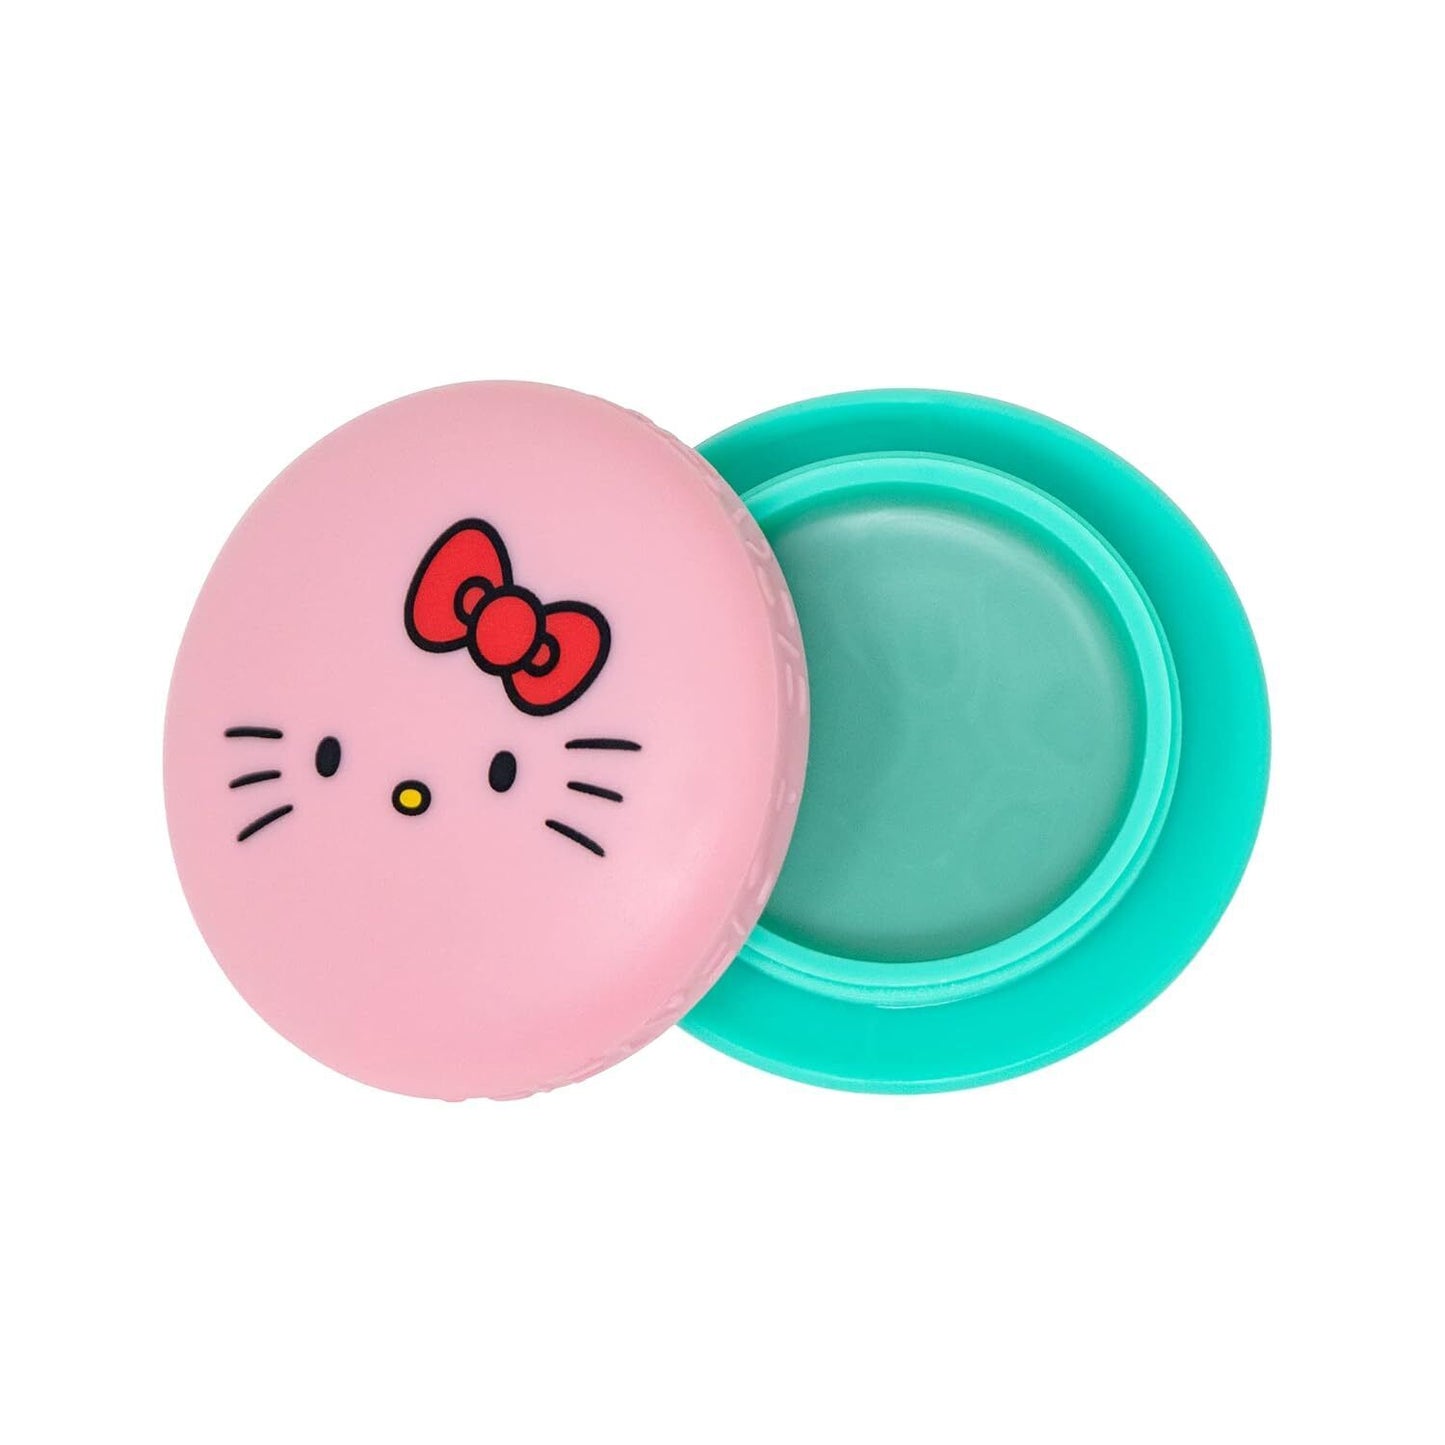 Hello Kitty Macaron Lip Balm - Watermelon